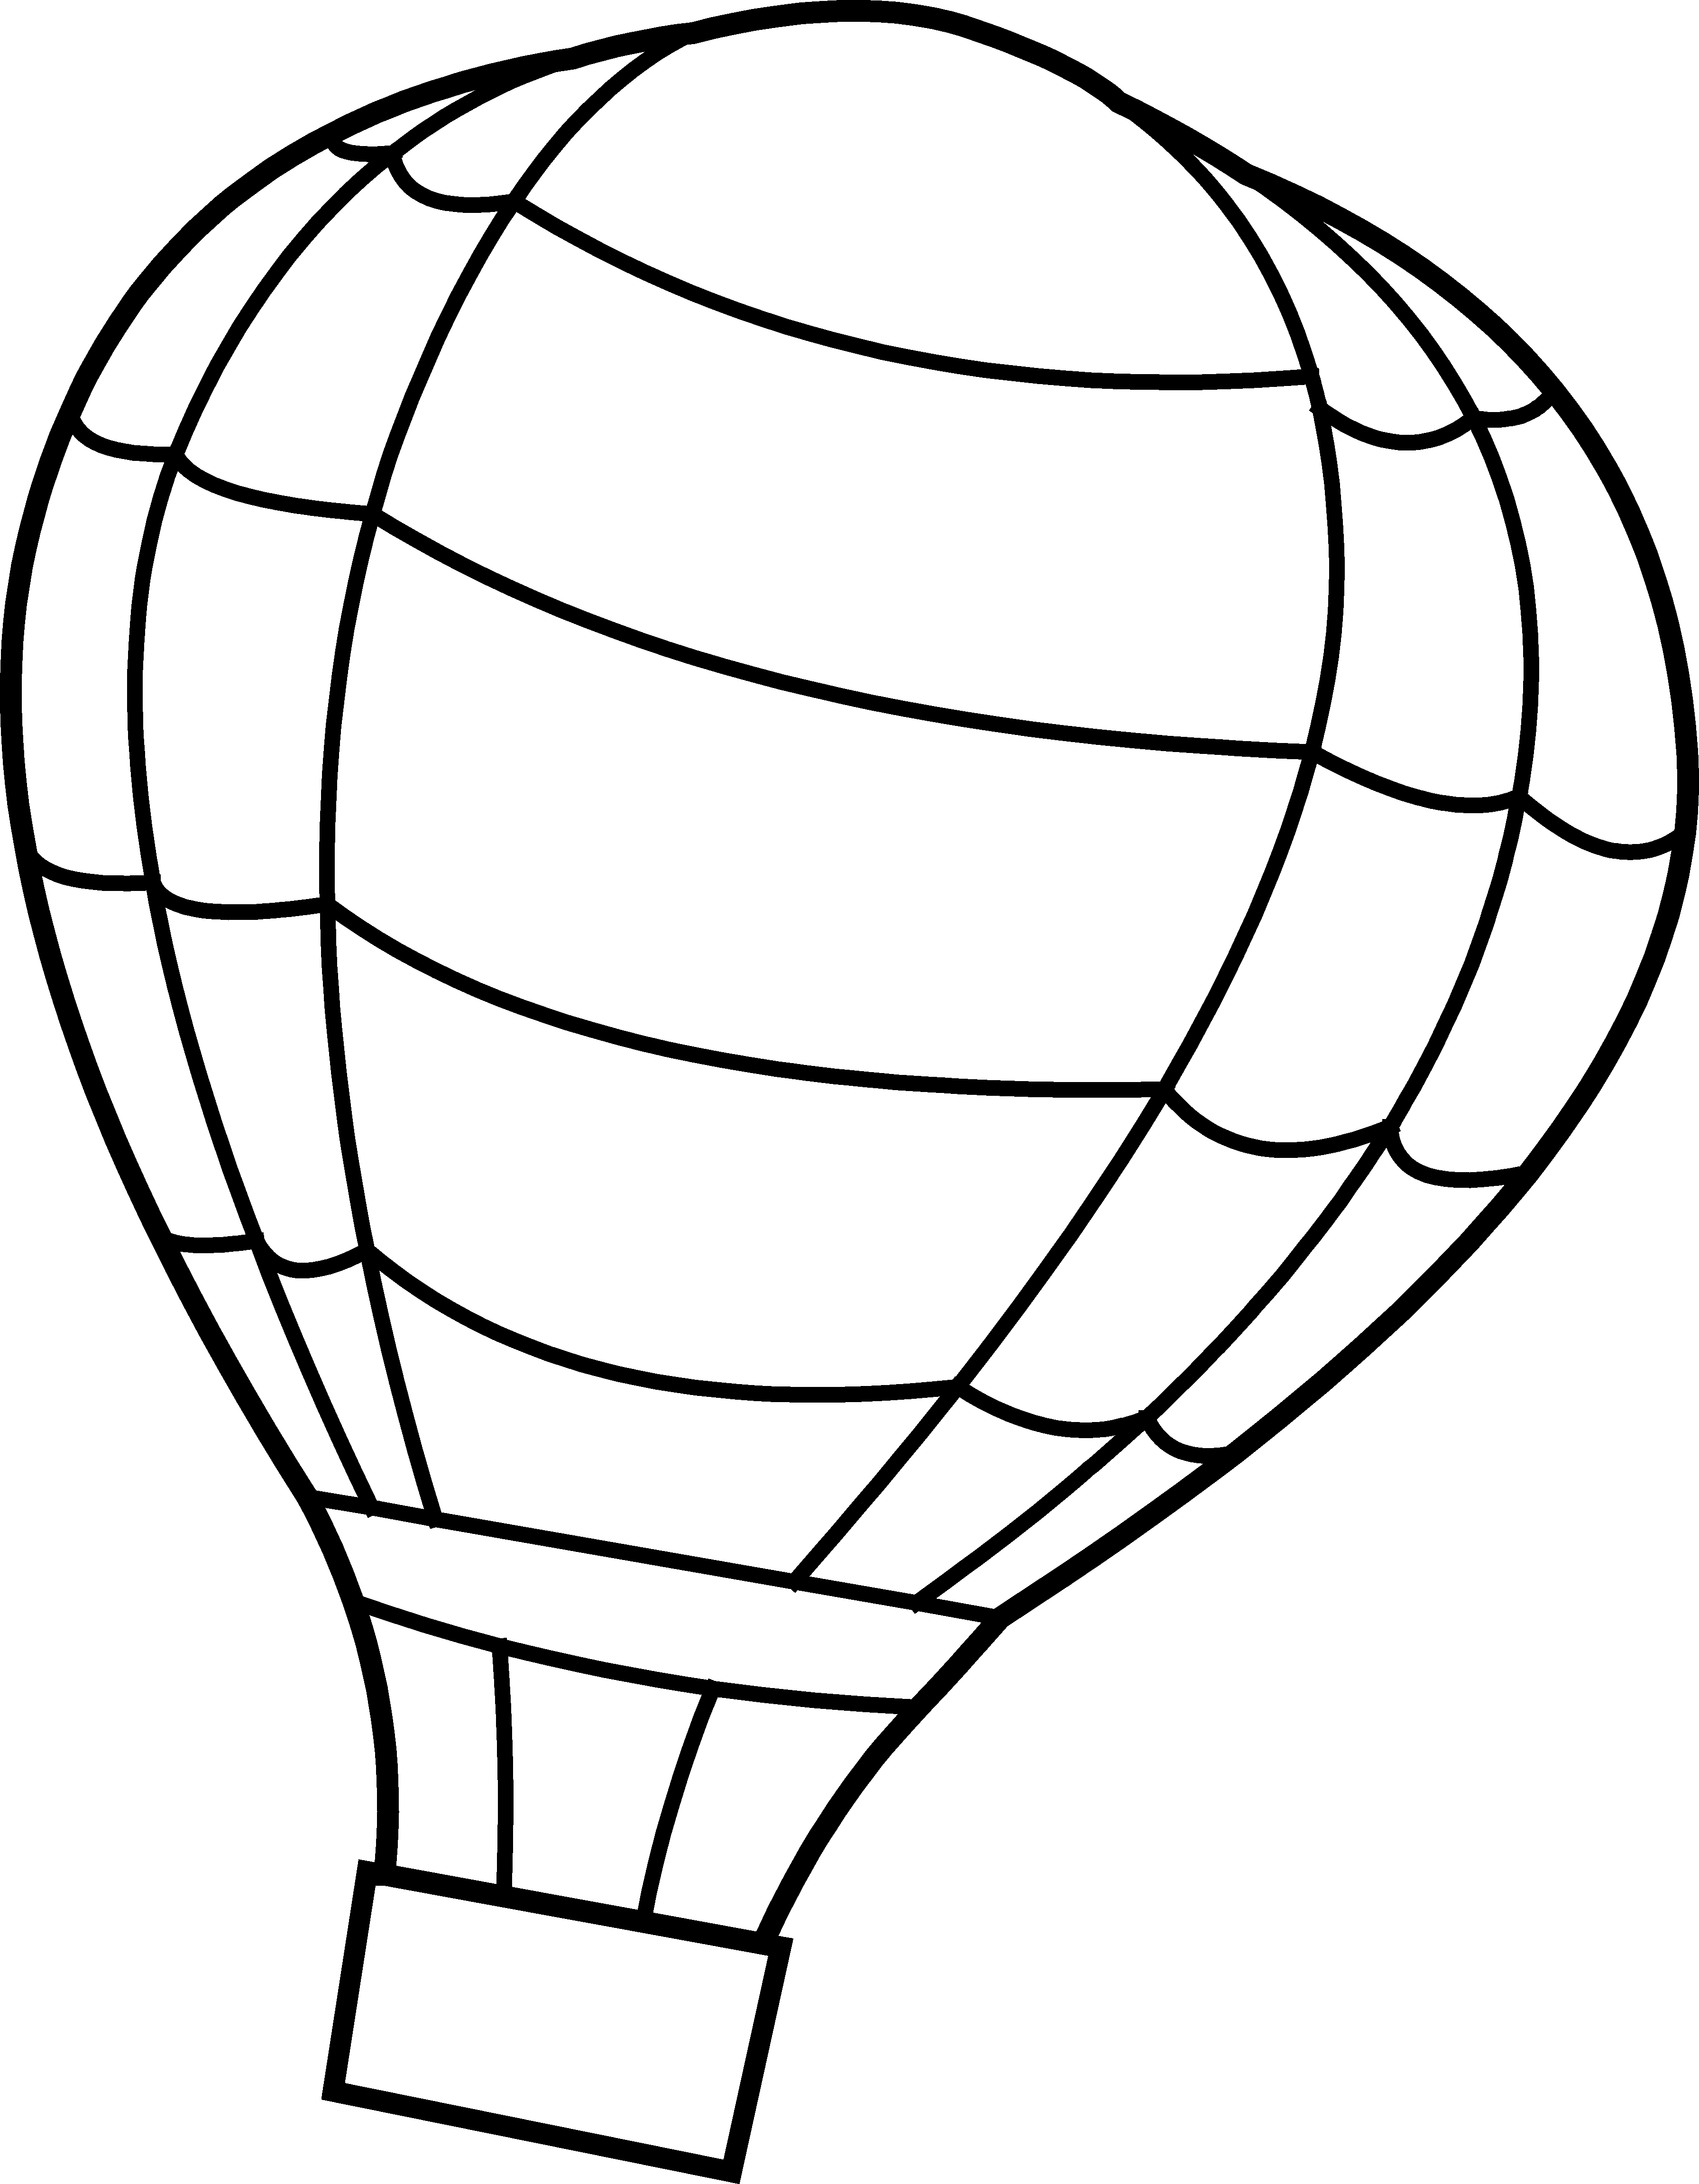 Hot Air Balloon Basket Template   Clipart Panda   Free Clipart Images